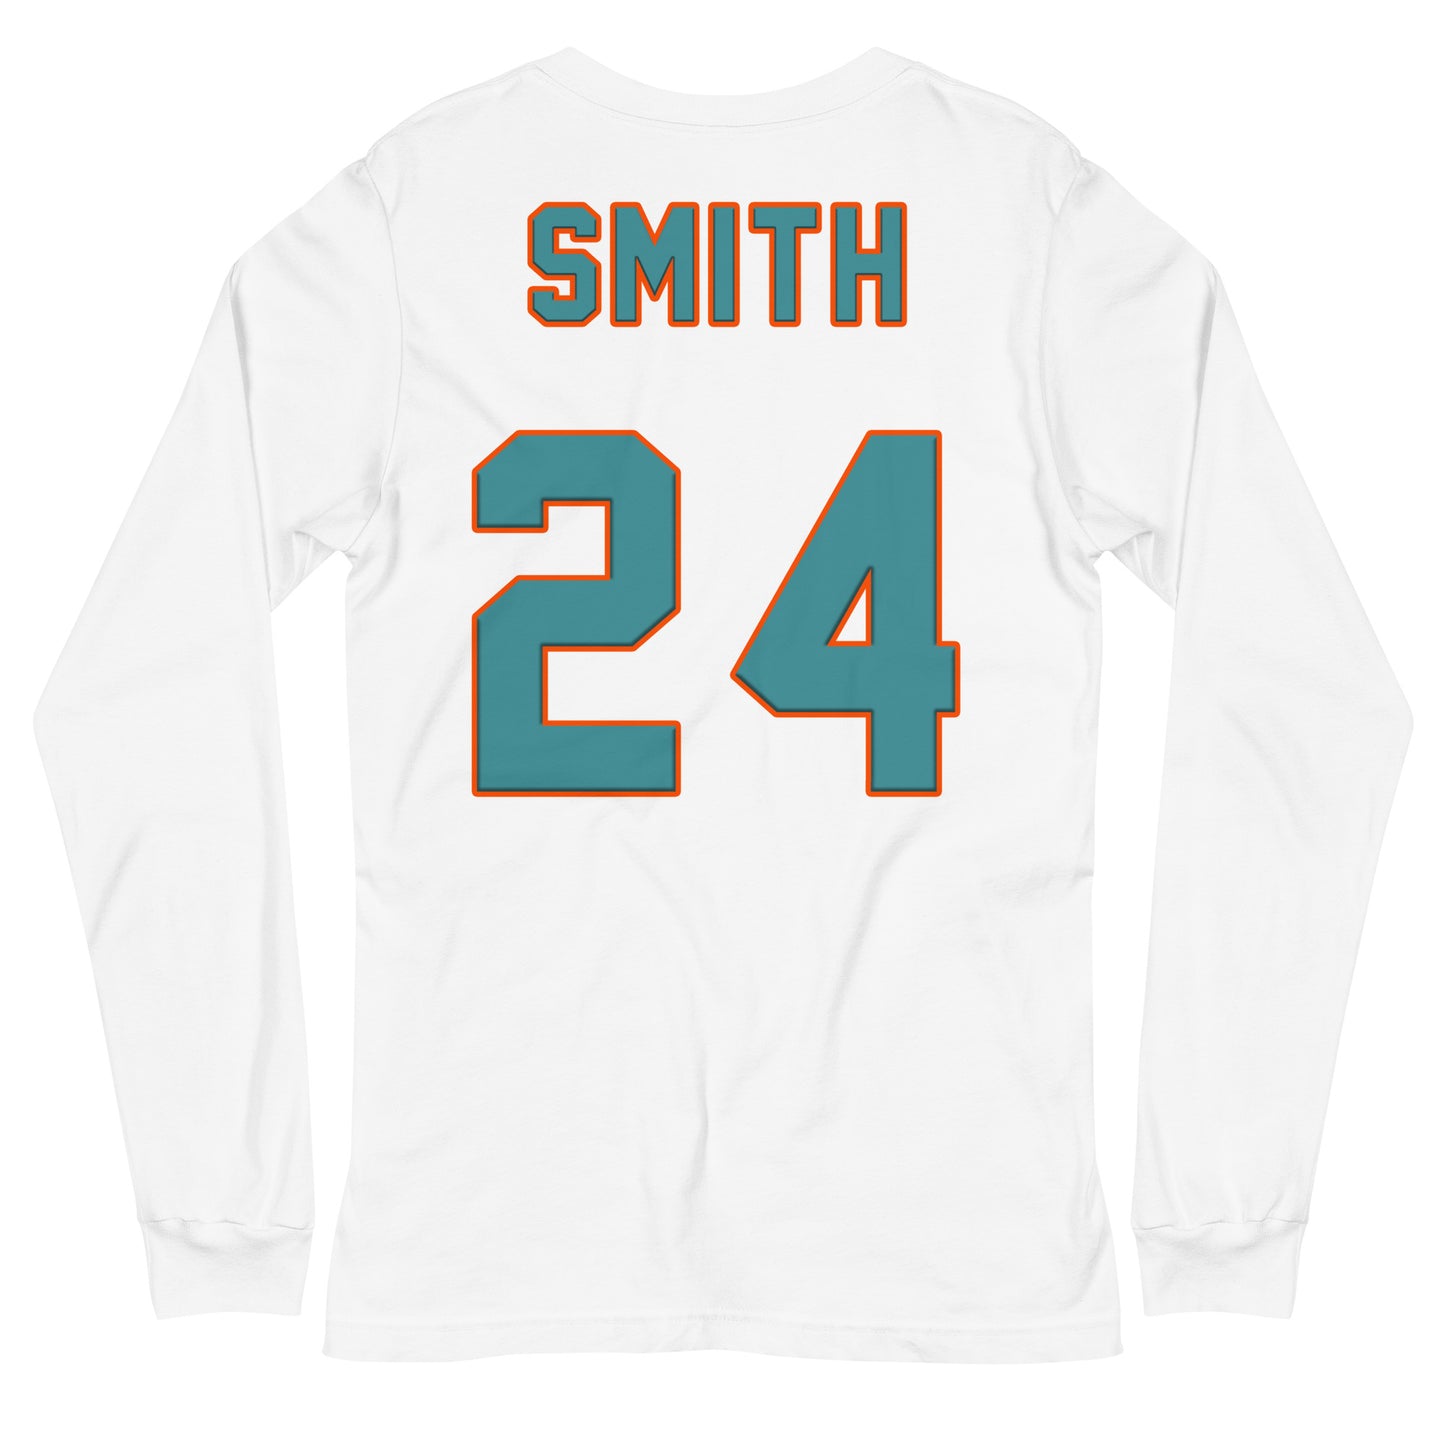 Smith 24 Long Sleeve